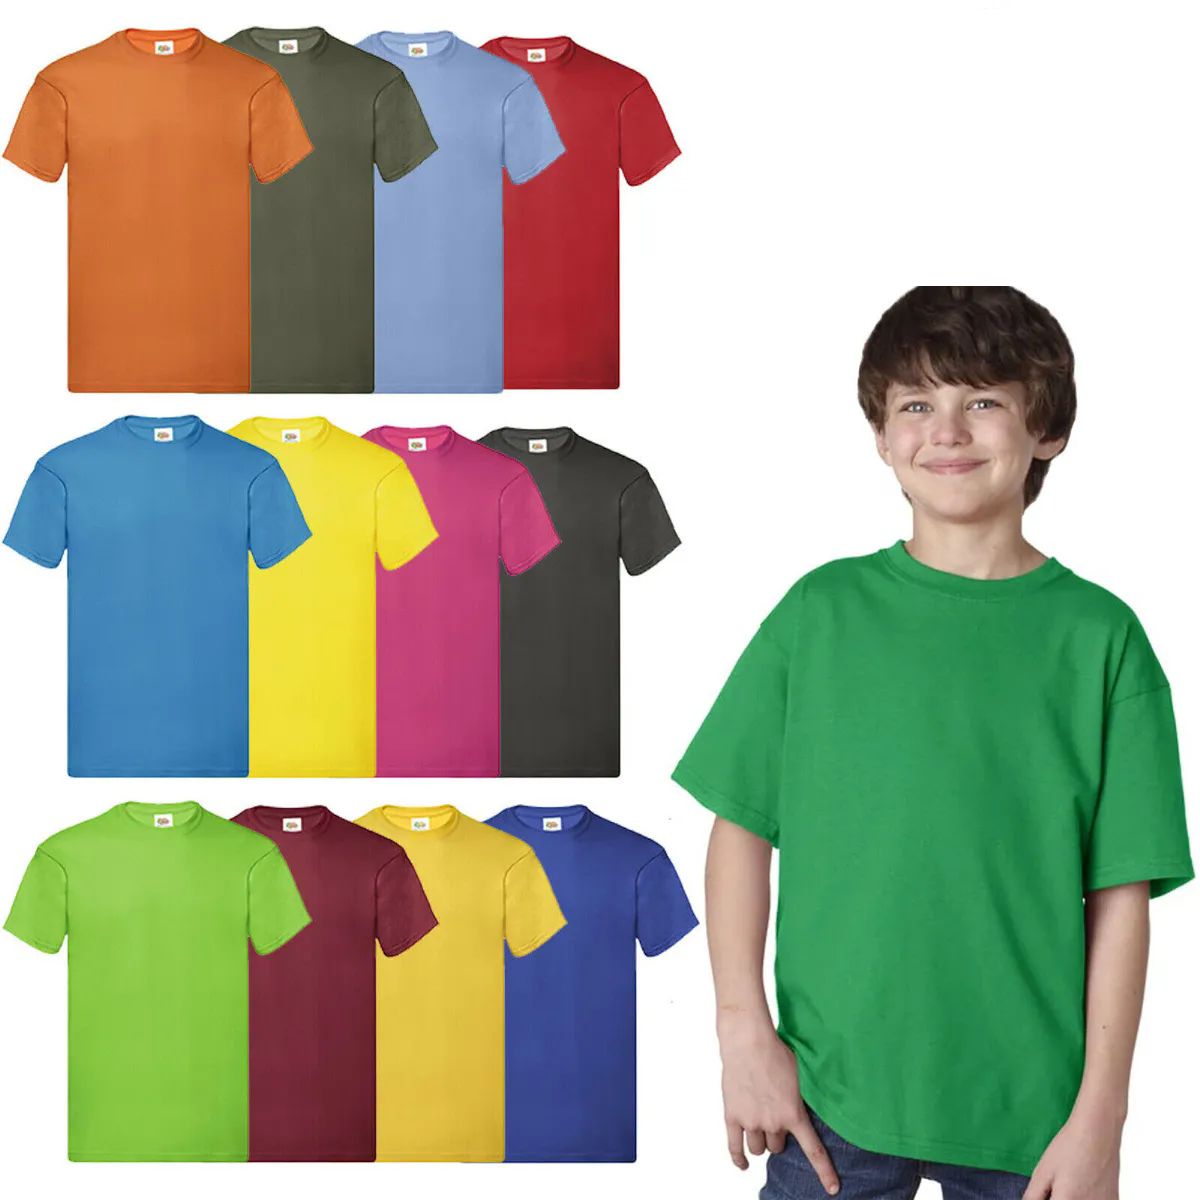 144 Bulk Billion Hats Kids Youth Cotton Assorted Colors T Shirts Size S